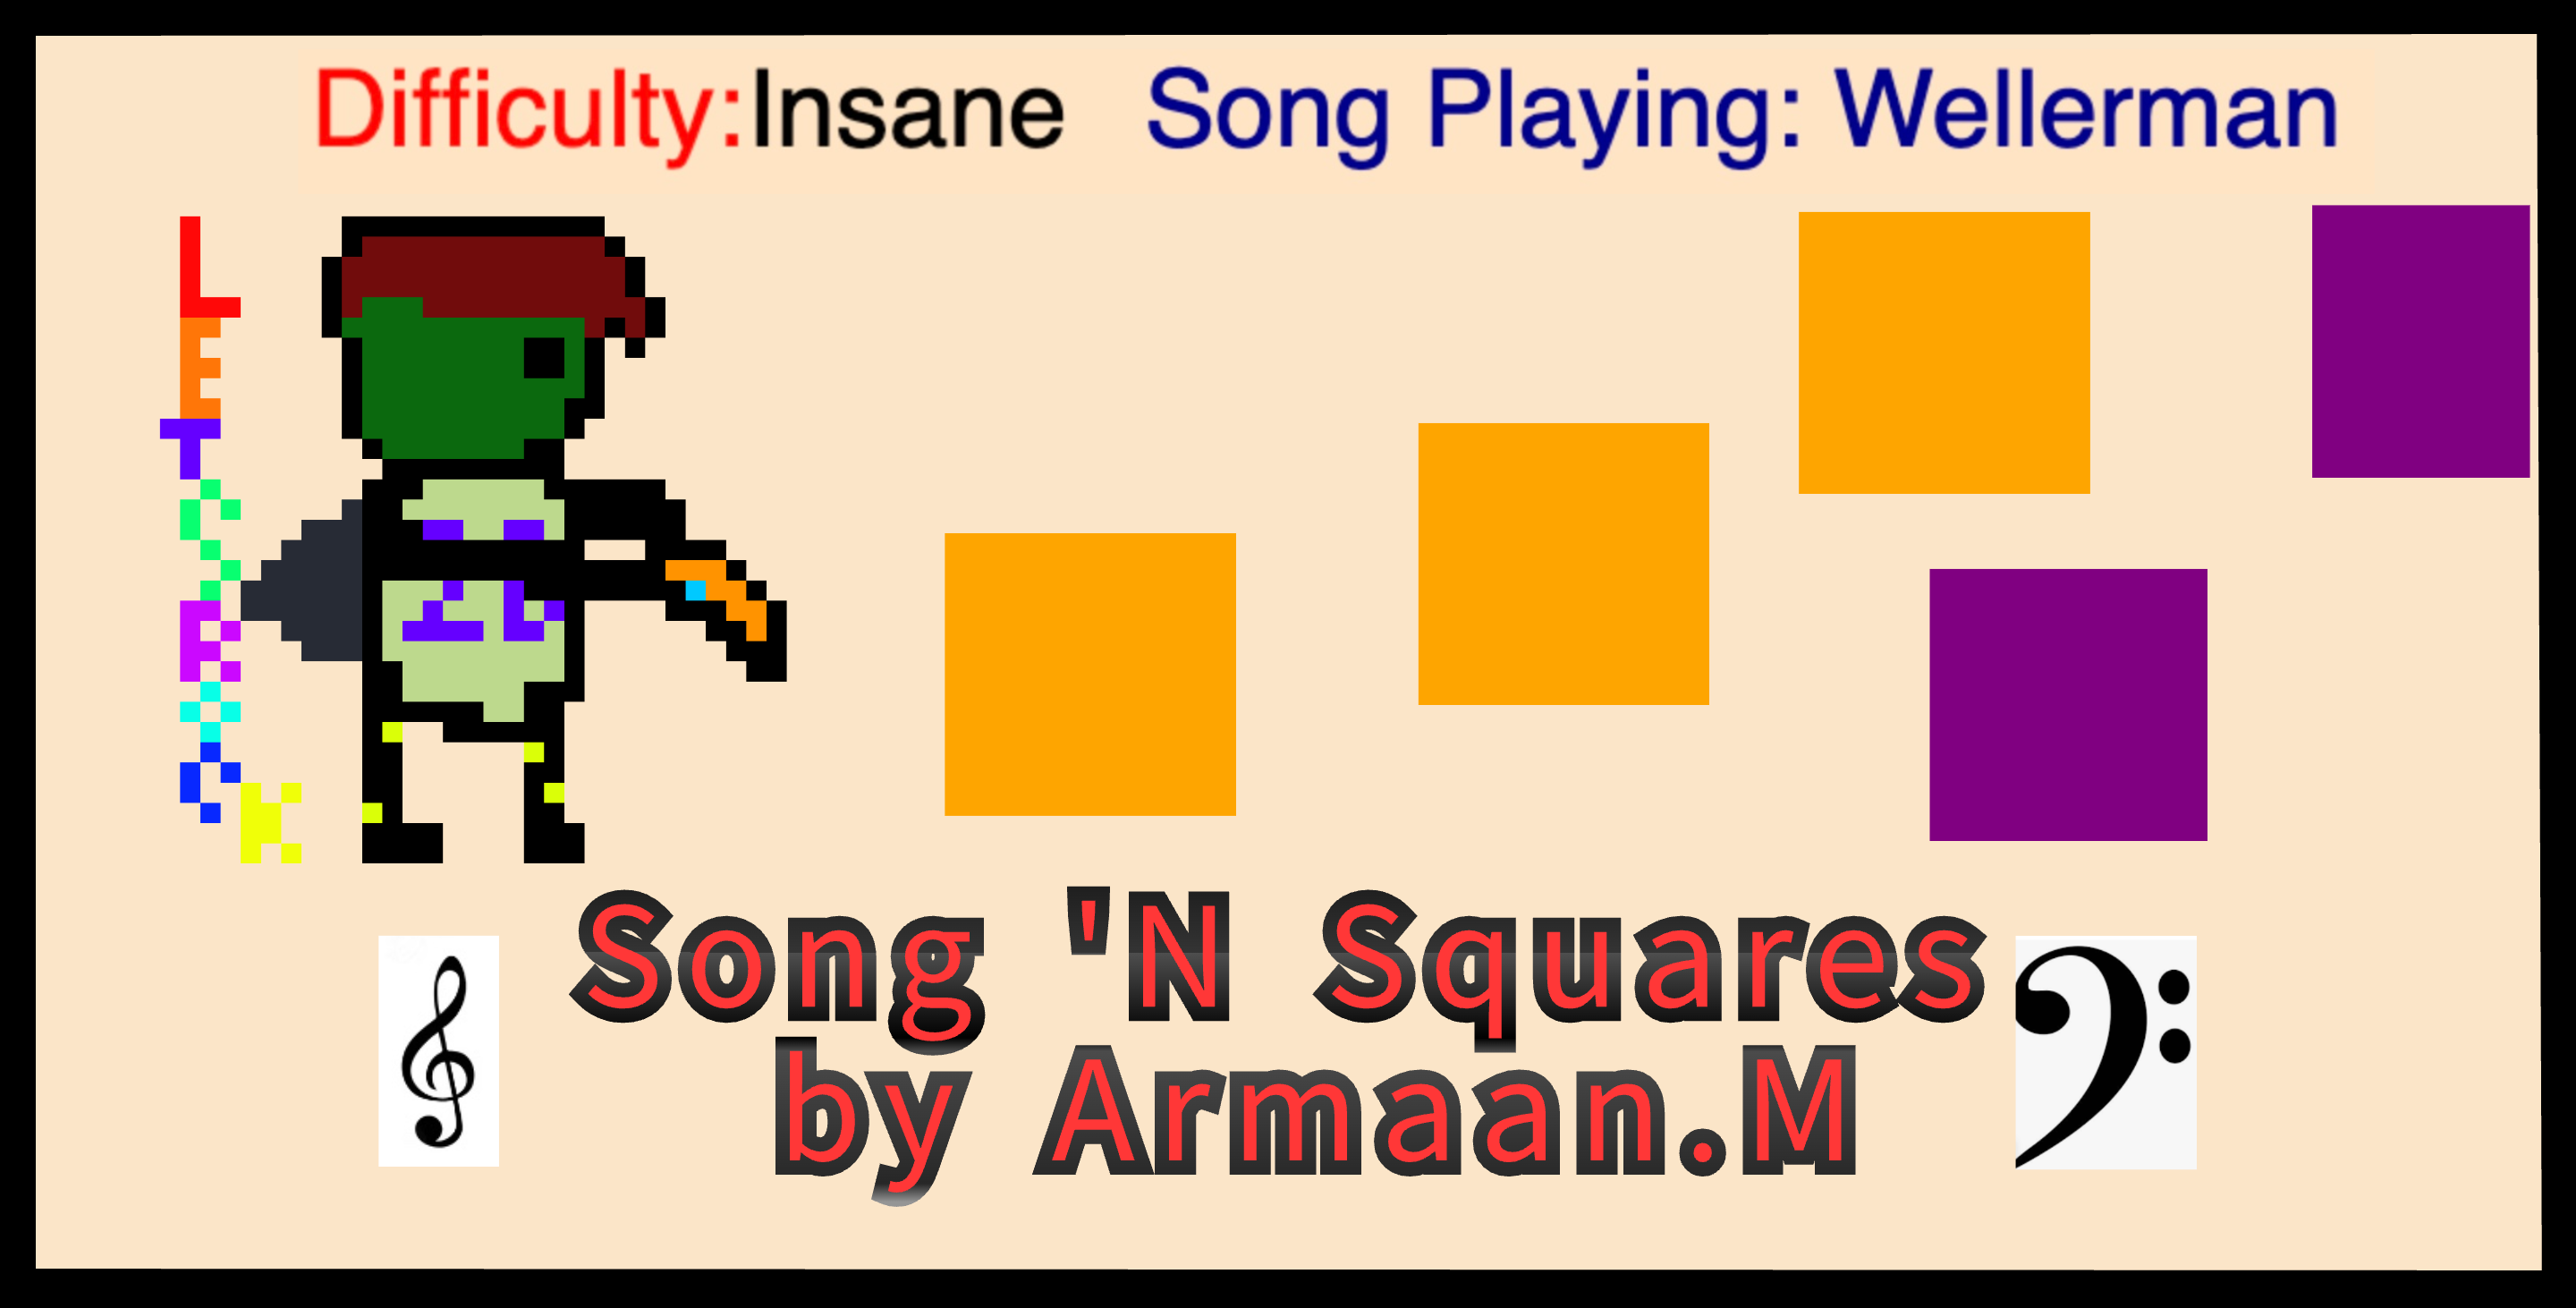 Song 'N Squares